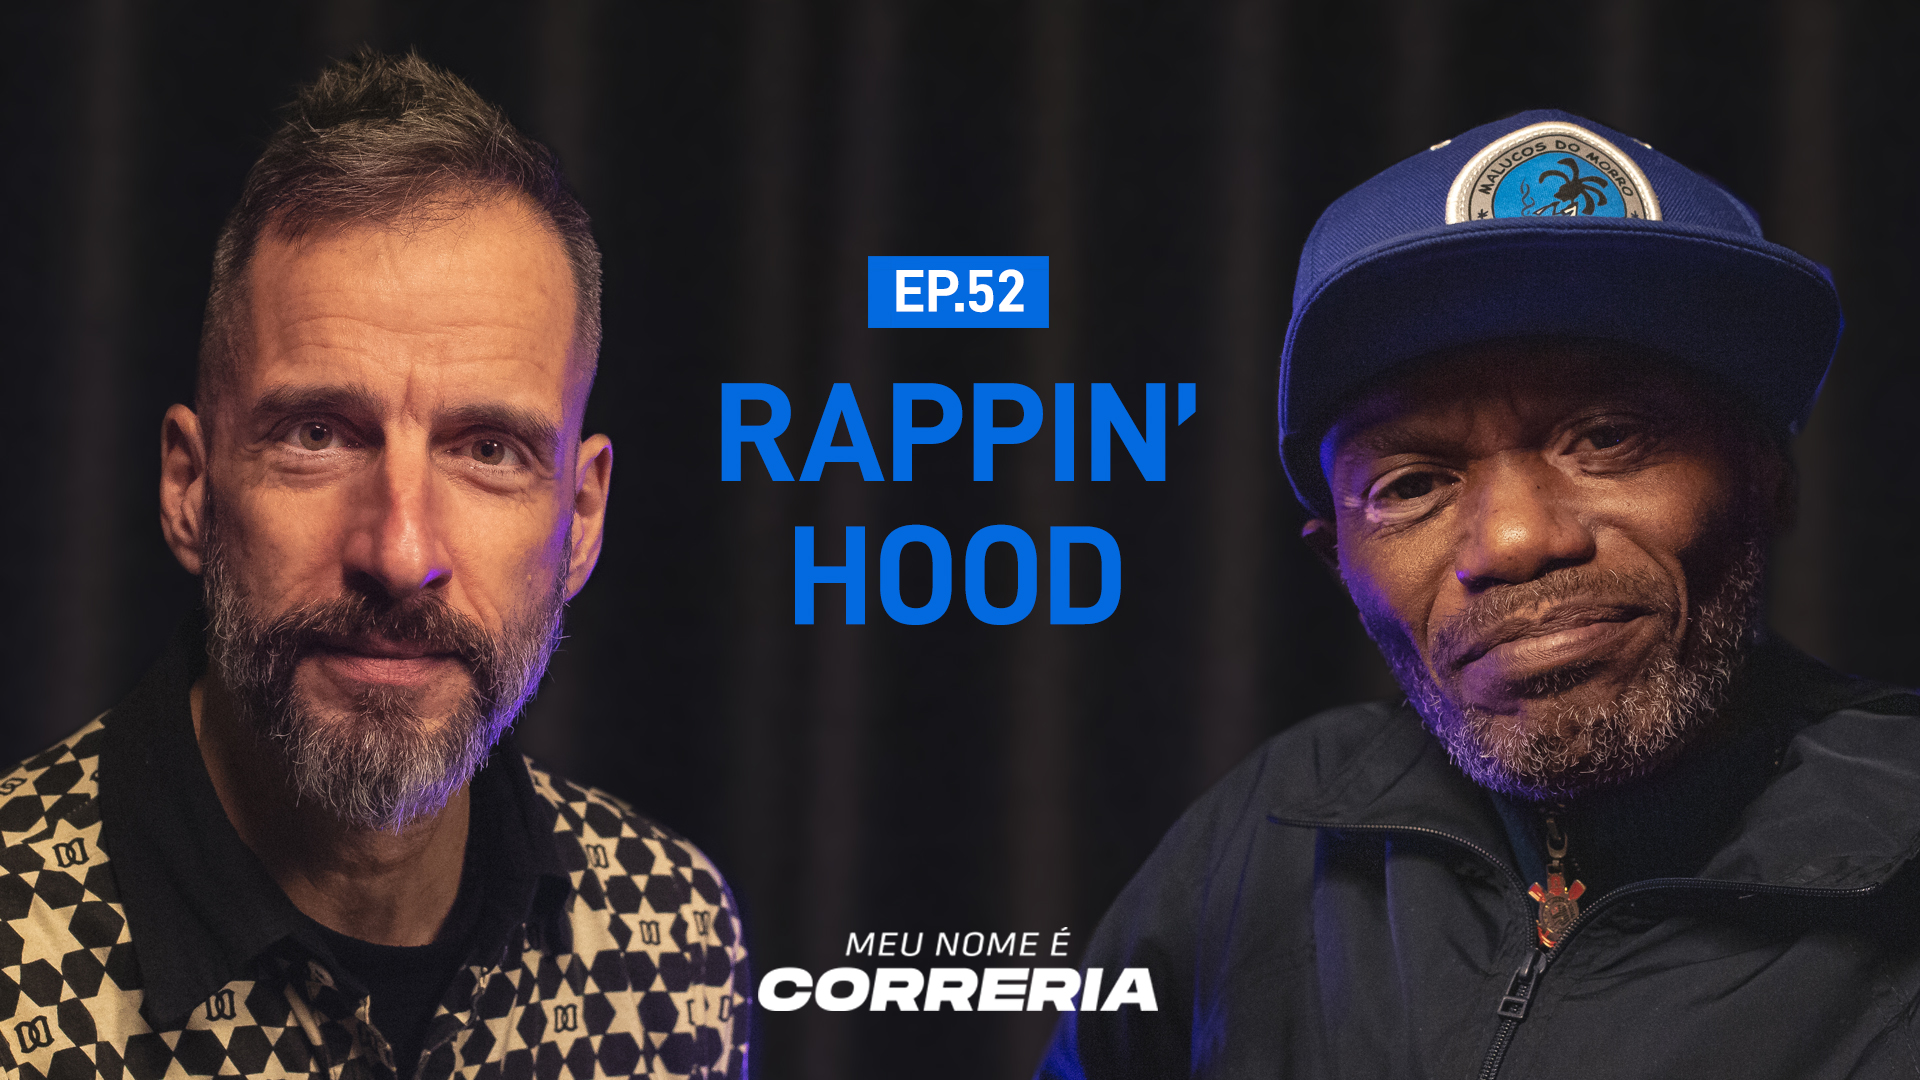 Rappin’ Hood